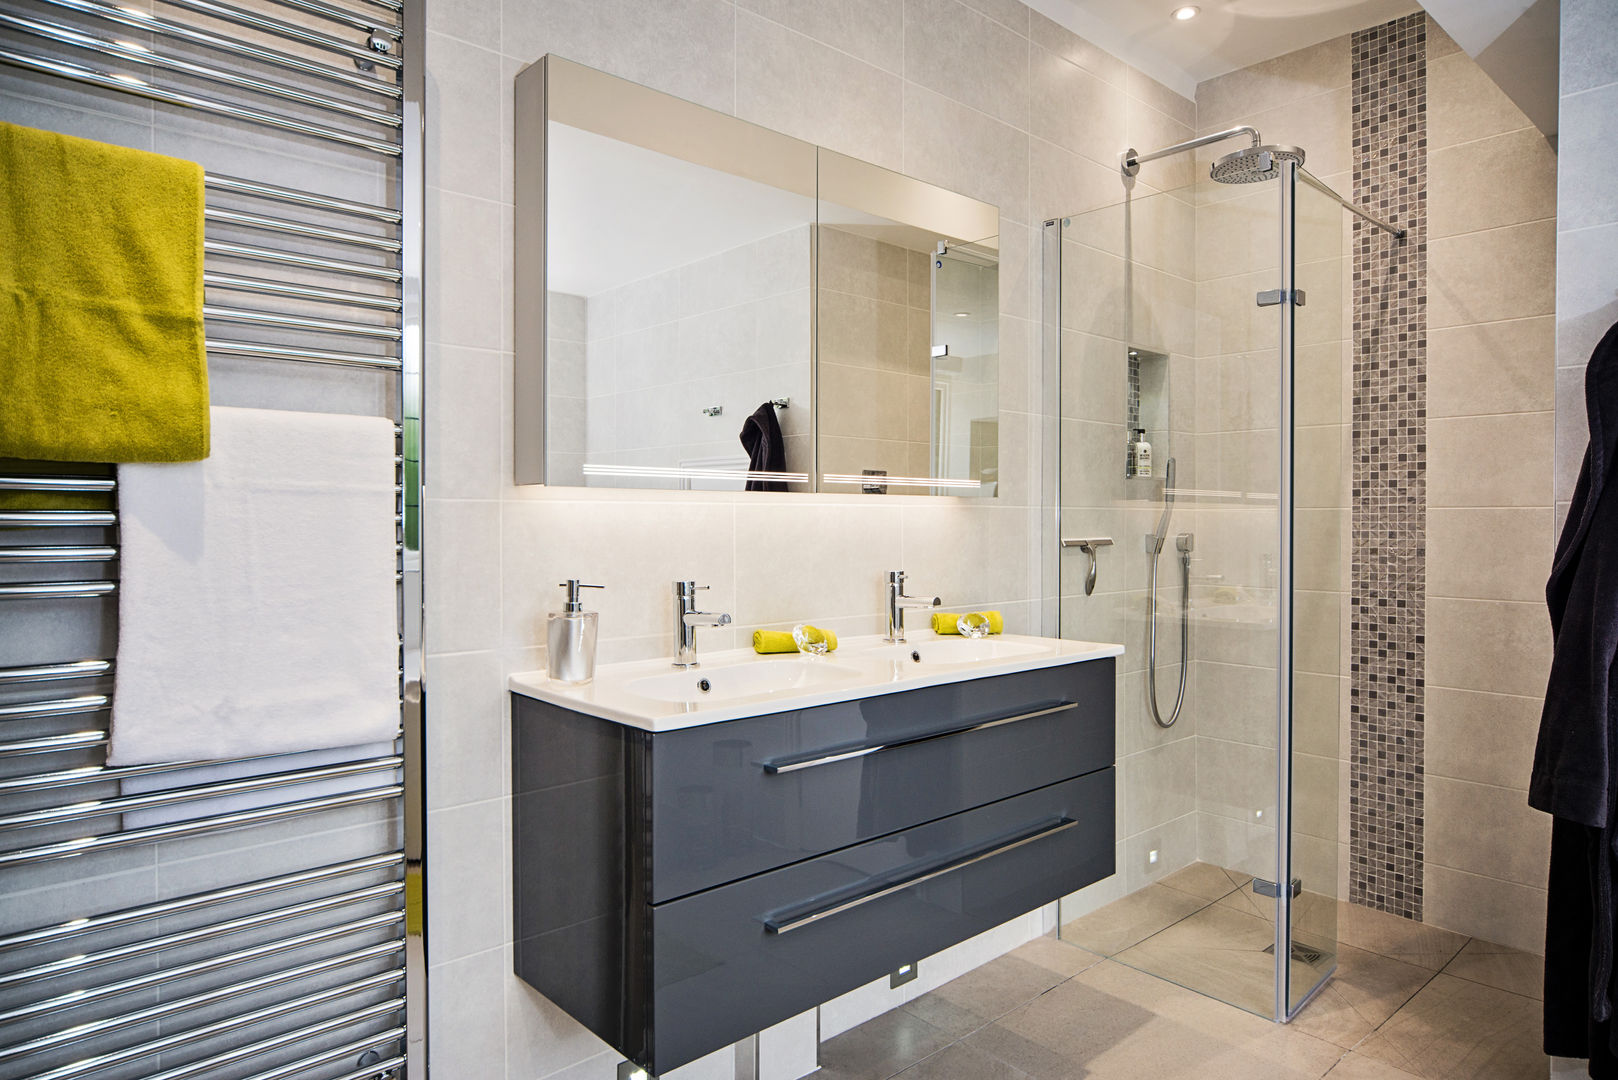 Mr & Mrs D, En-Suite, Guildford Raycross Interiors Nowoczesna łazienka bathroom design,installation,mosaic tiles,walk-in shower,free-standing bath,mirror cabinet